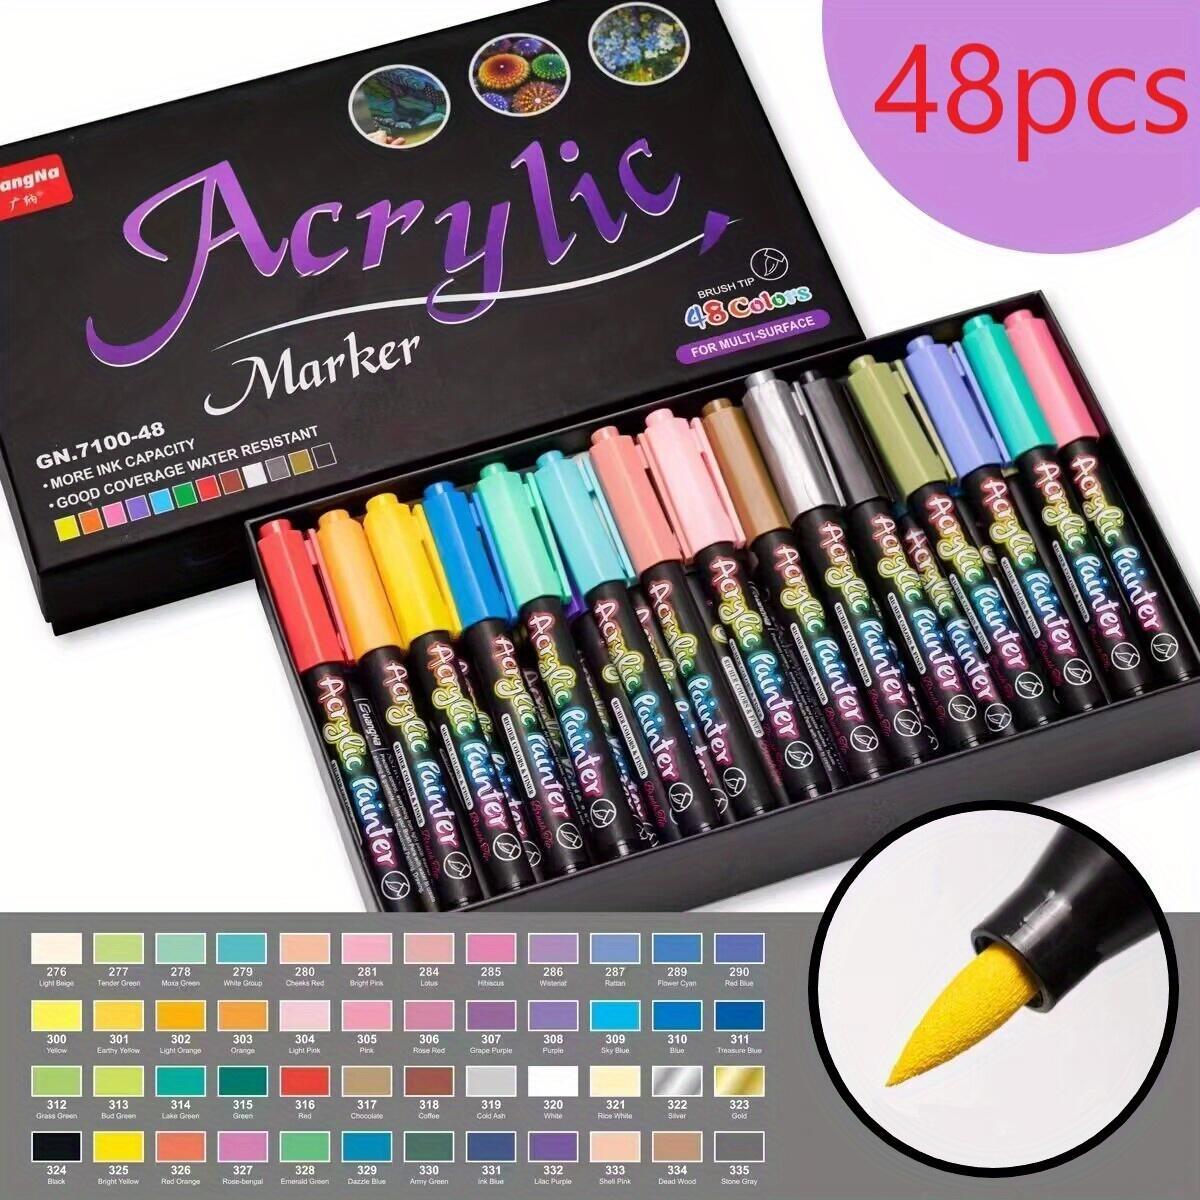 Cheap High-value acrylic marker multi-color 12/24/36 color set